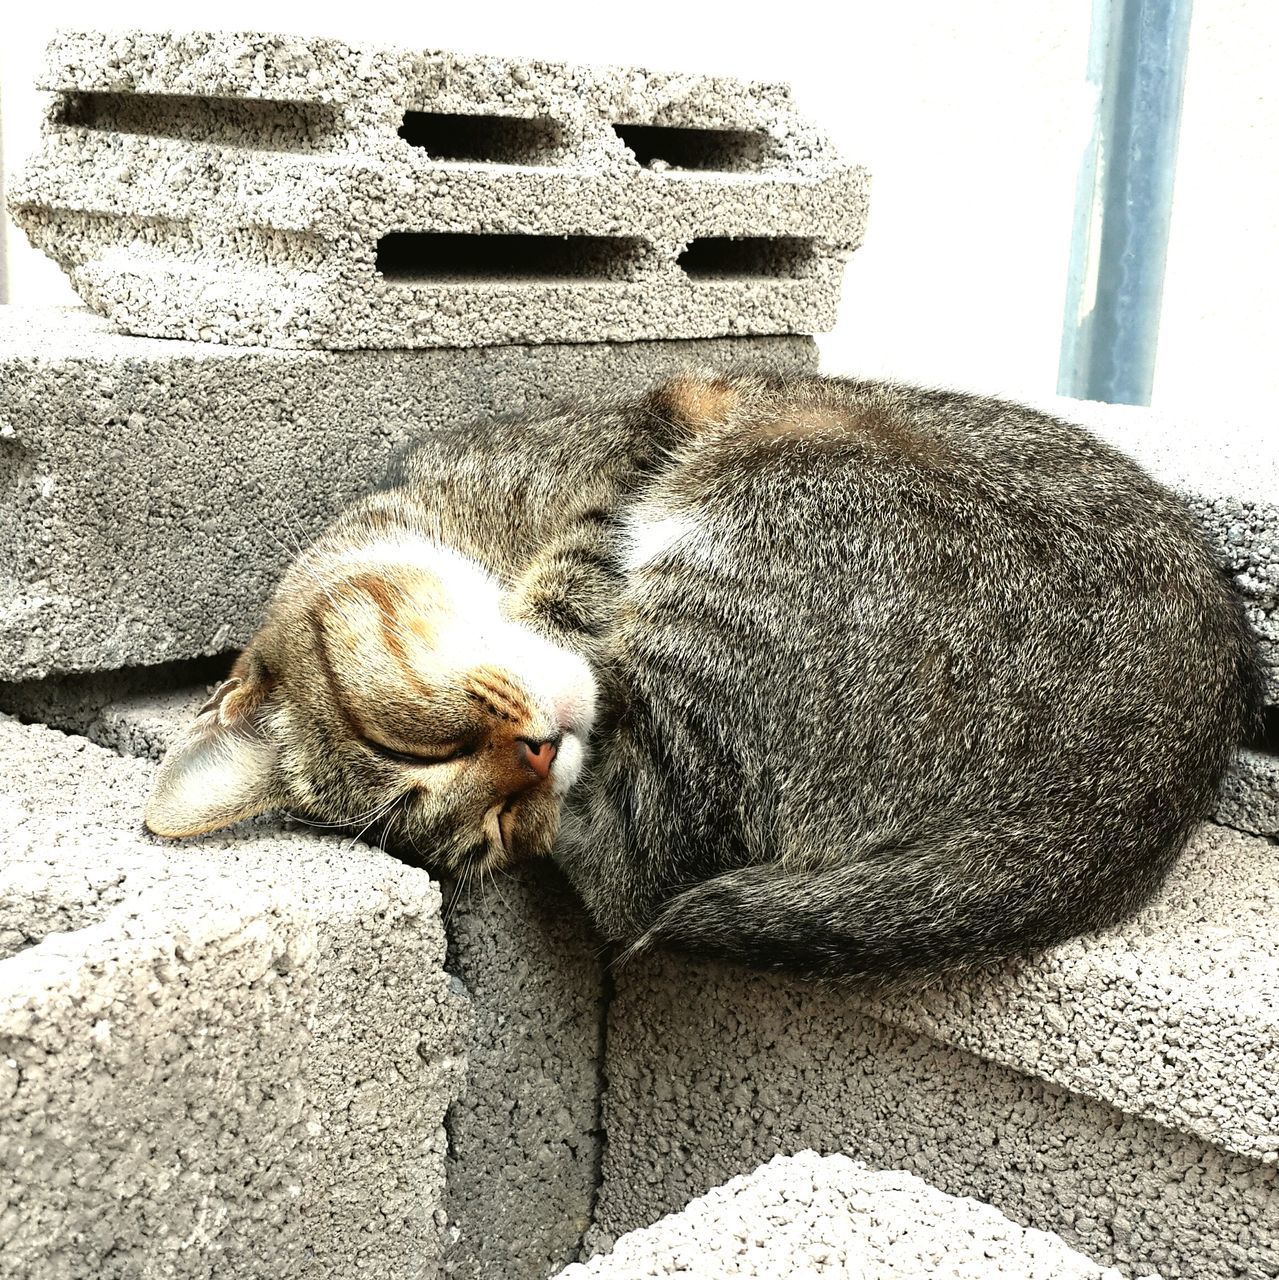 CAT SLEEPING IN A ANIMAL